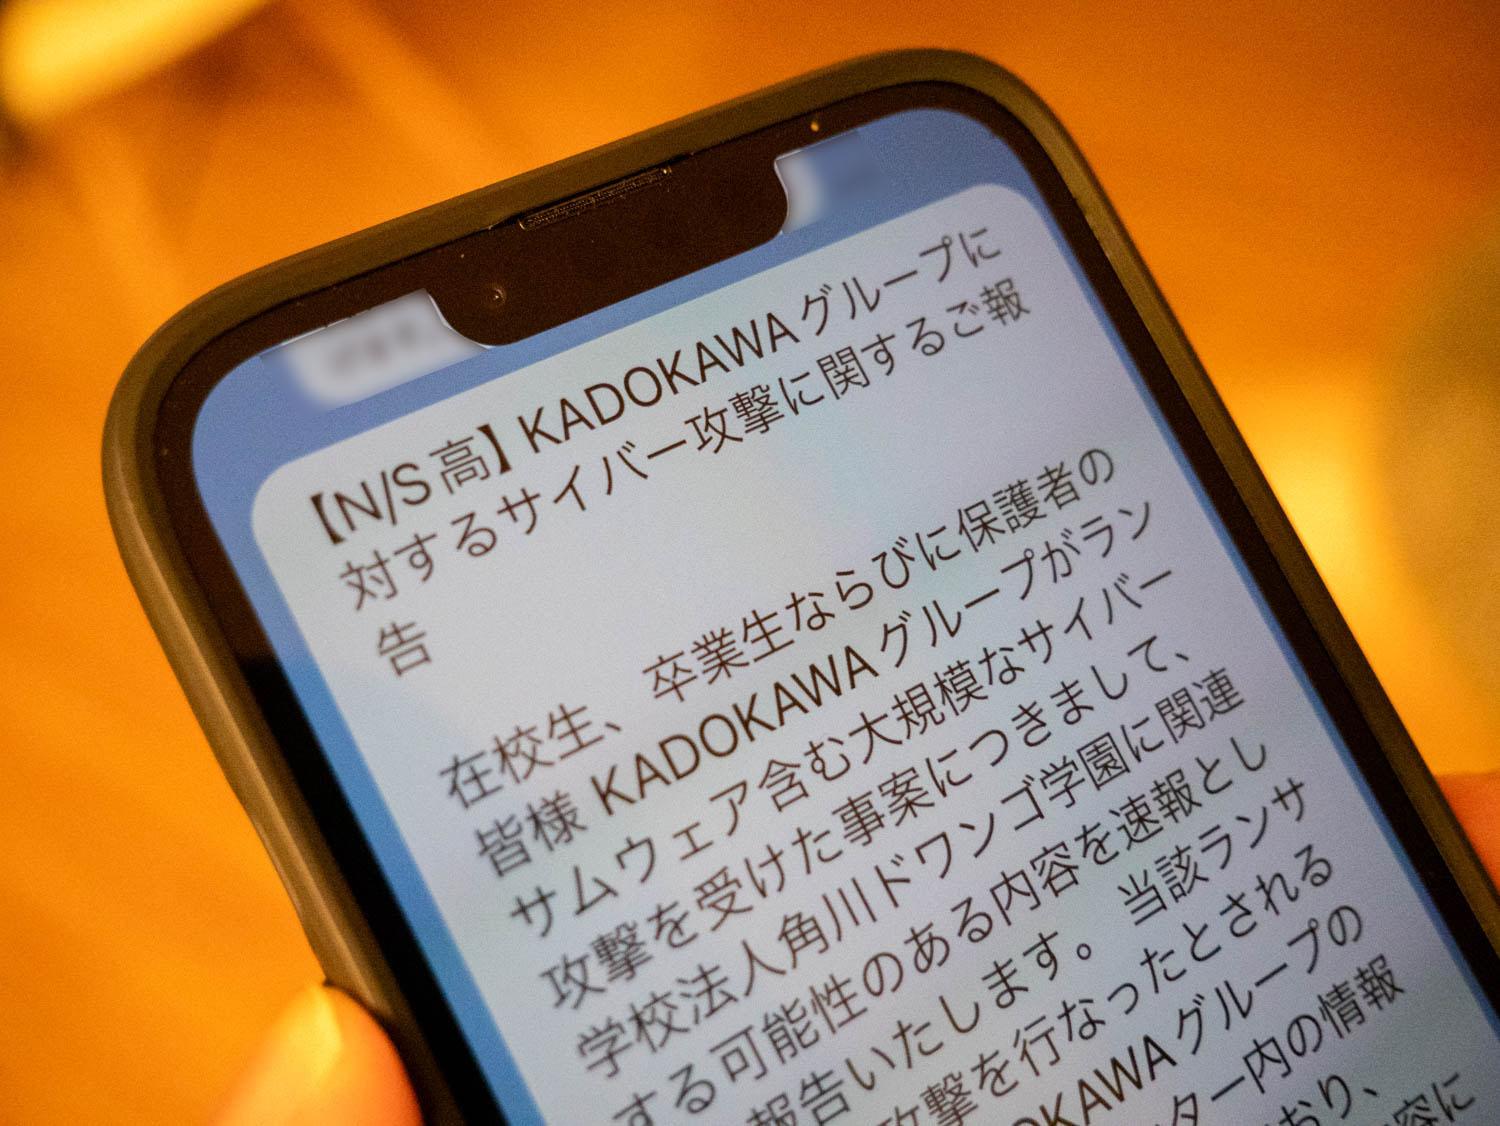 【KADOKAWAサイバー攻撃】N高・S高生徒の個人情報流出の懸念について保護者に注意喚起